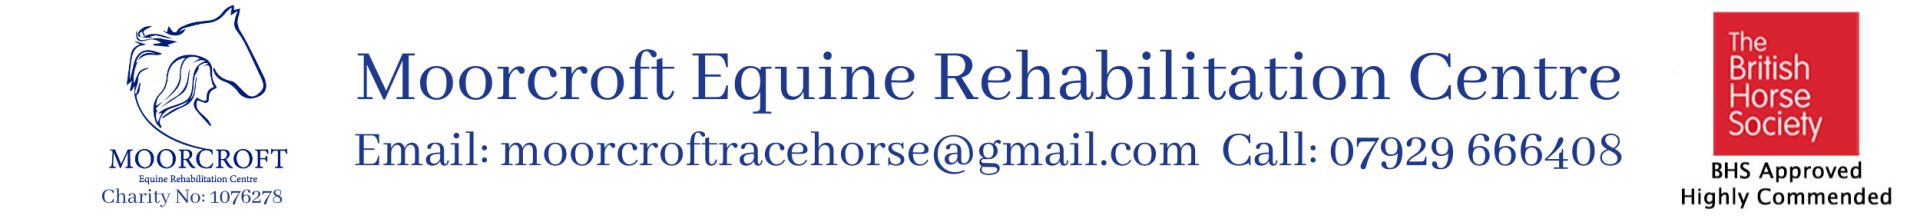 Moorcroft Equine Rehabilitation Centre Logo Title